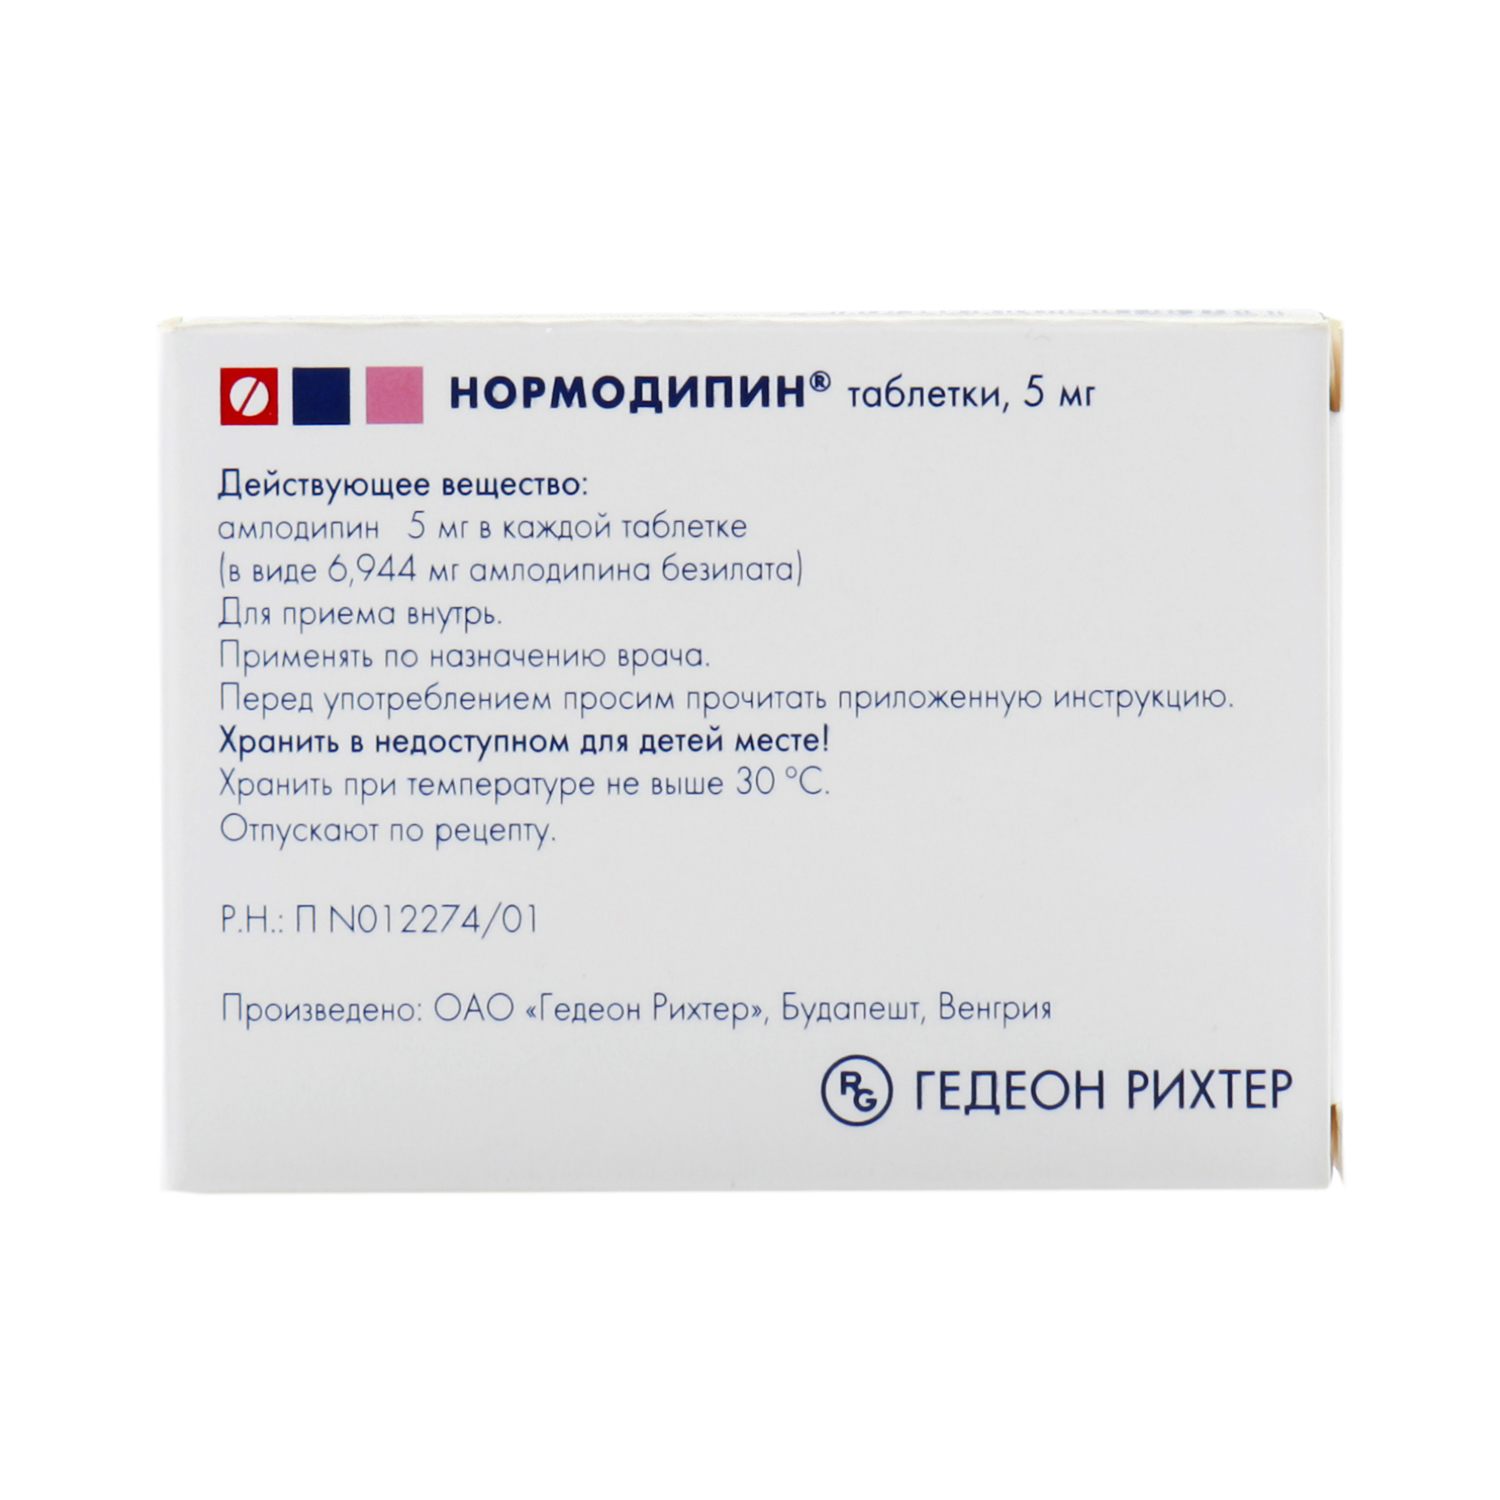 Нормодипин Таблетки 5 мг 30 шт  по цене 202,0 руб в интернет .